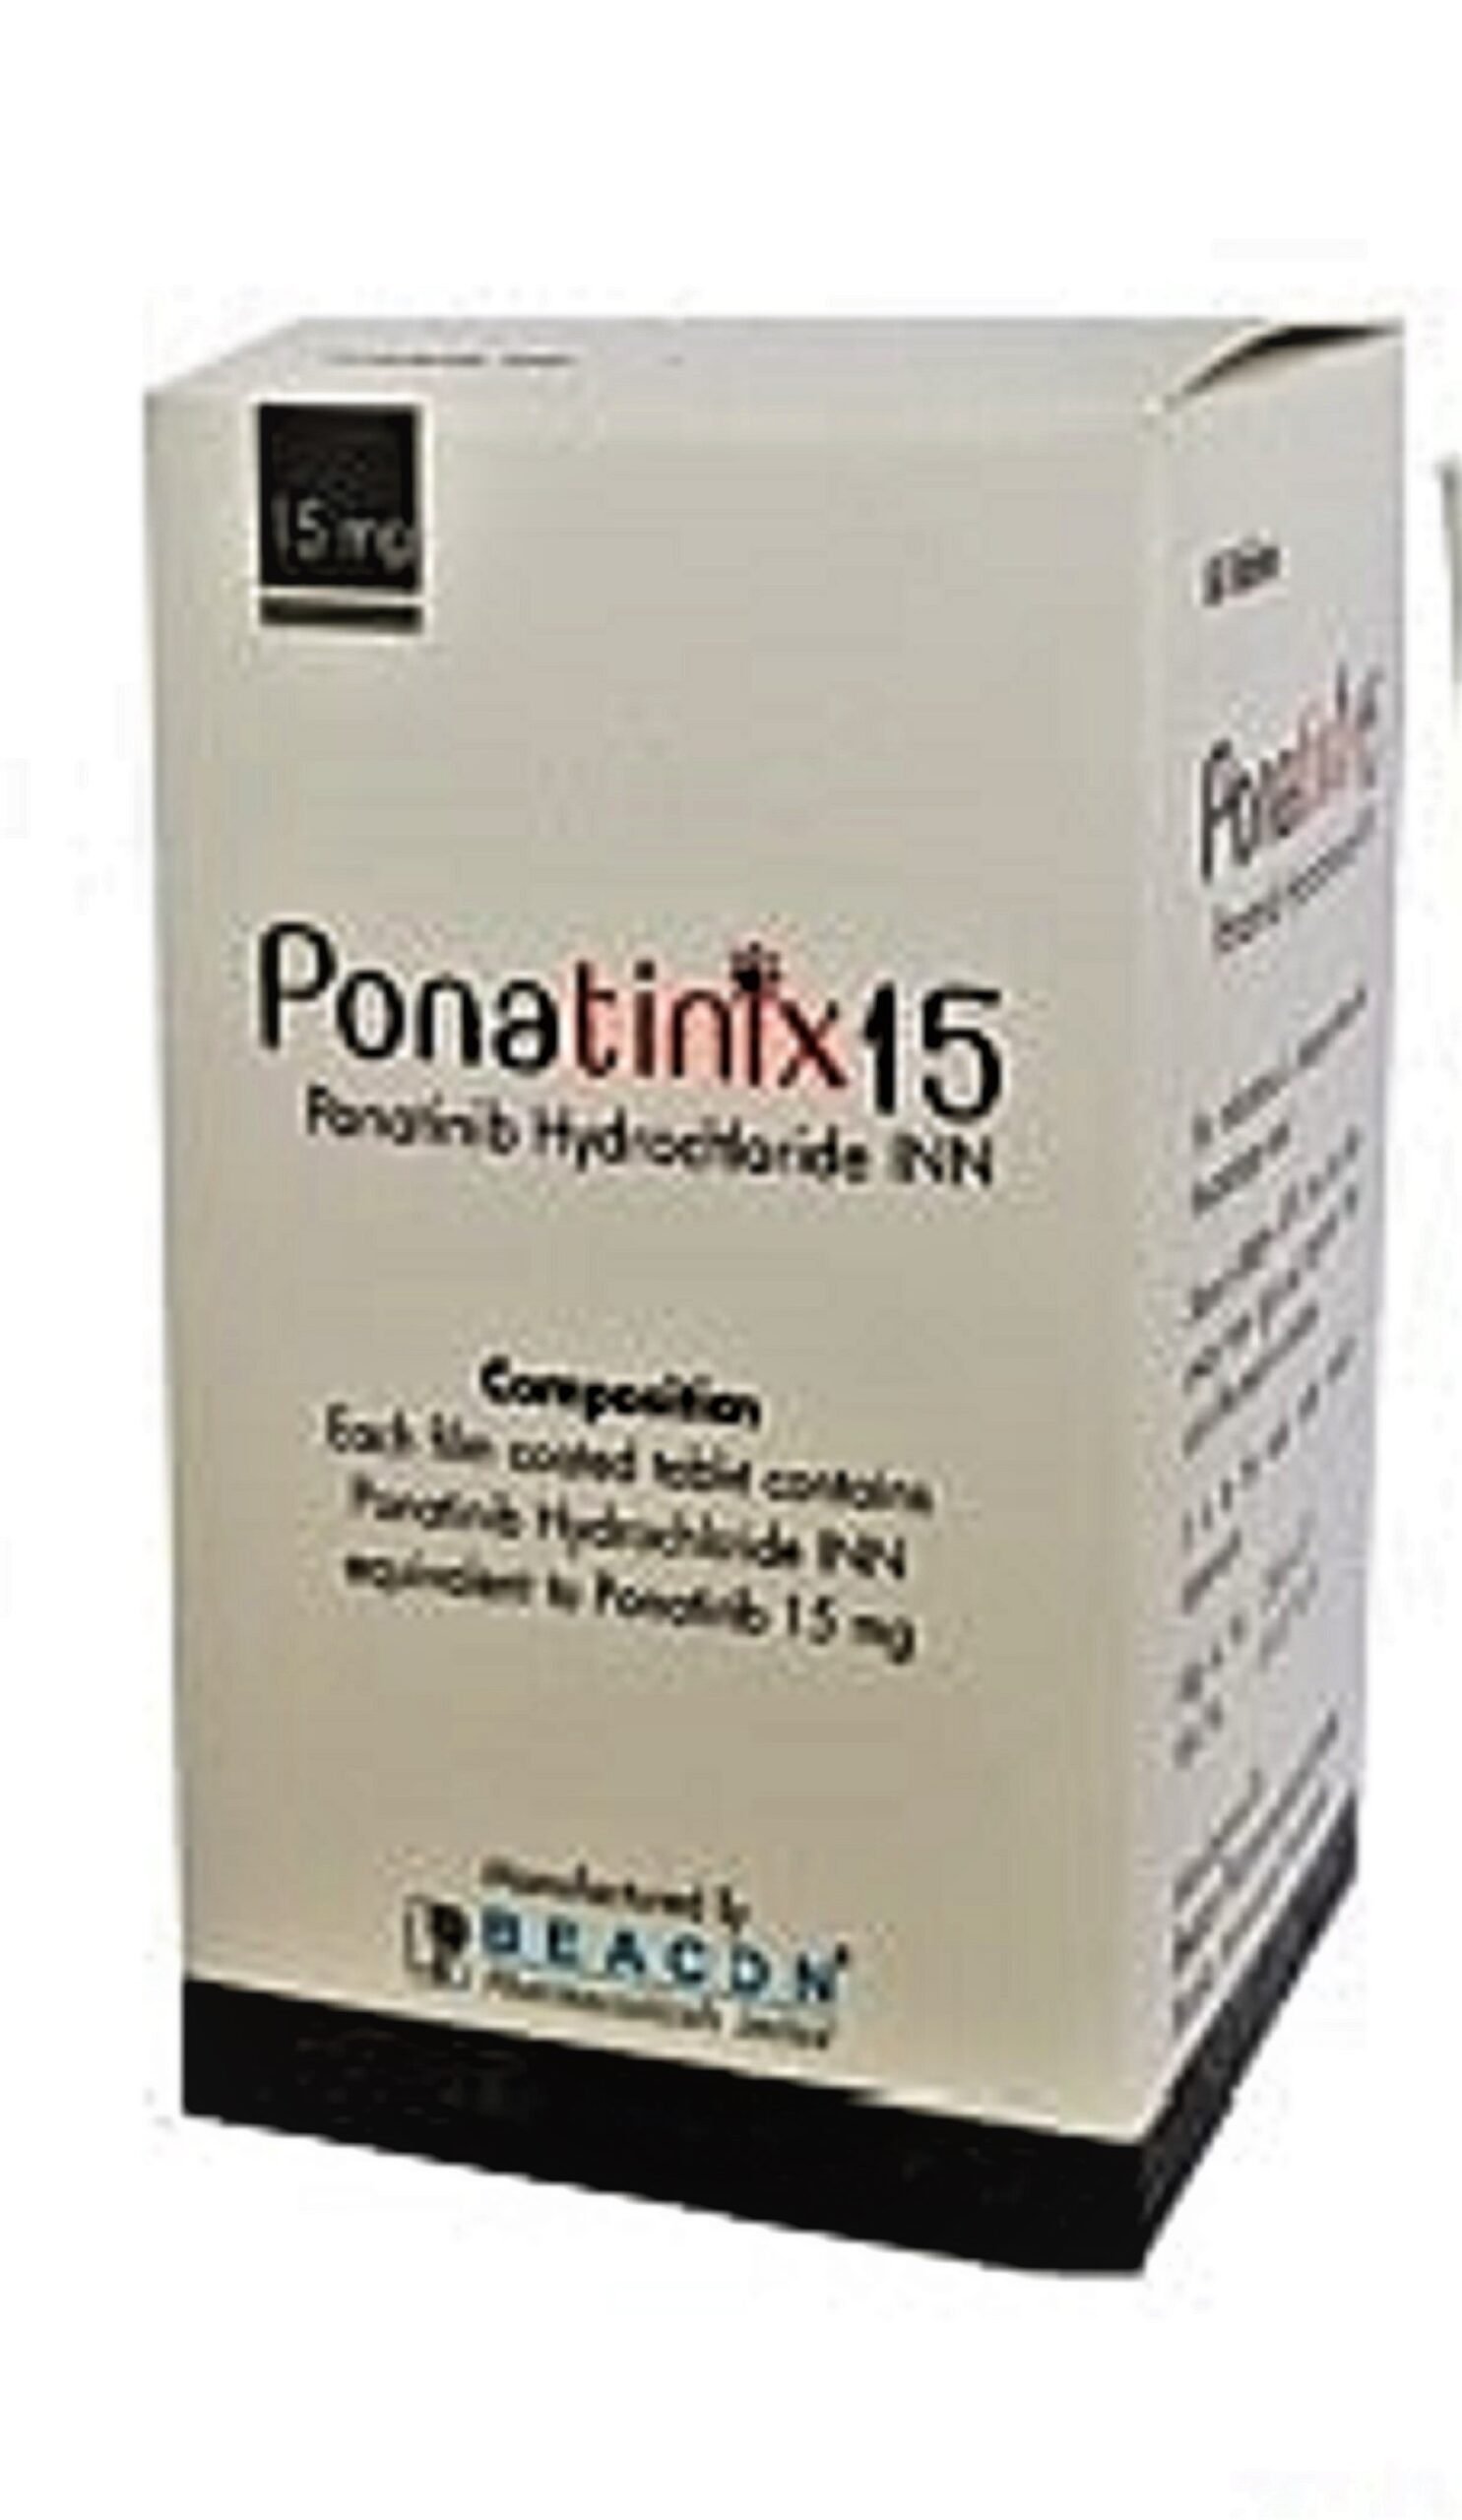 Ponatinix Ponatinib 15 MG